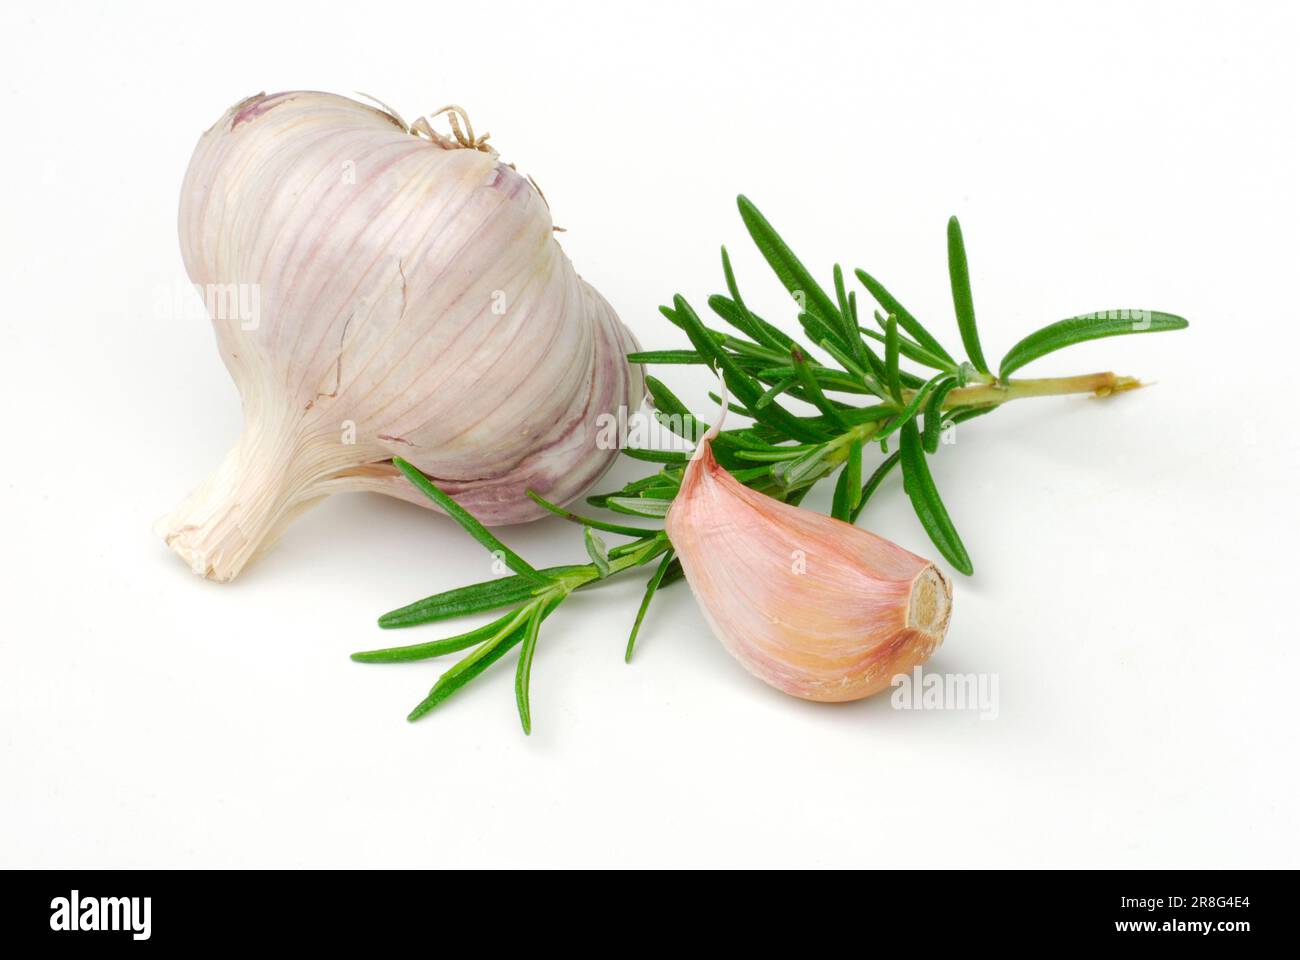 Garlic (Allium sativum) and Rosemary (Rosmarinus officinalis) Stock Photo